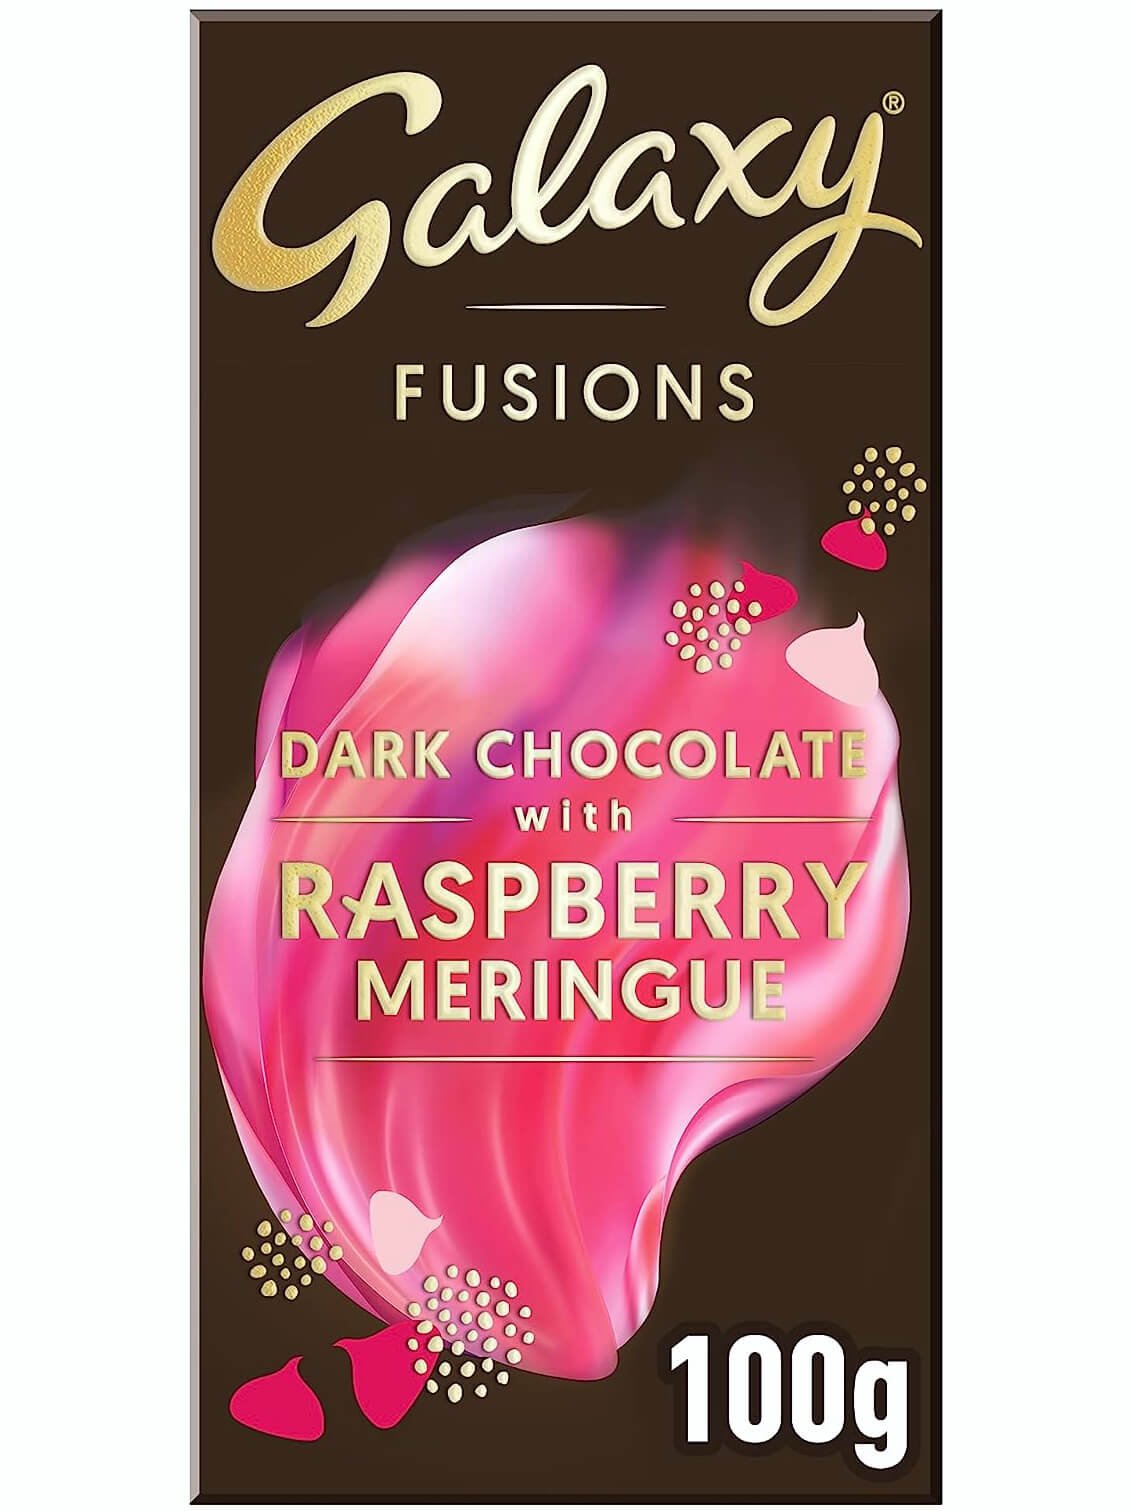 A single Galaxy Fusions bar in wrapper, dark chocolate with raspberry meringue